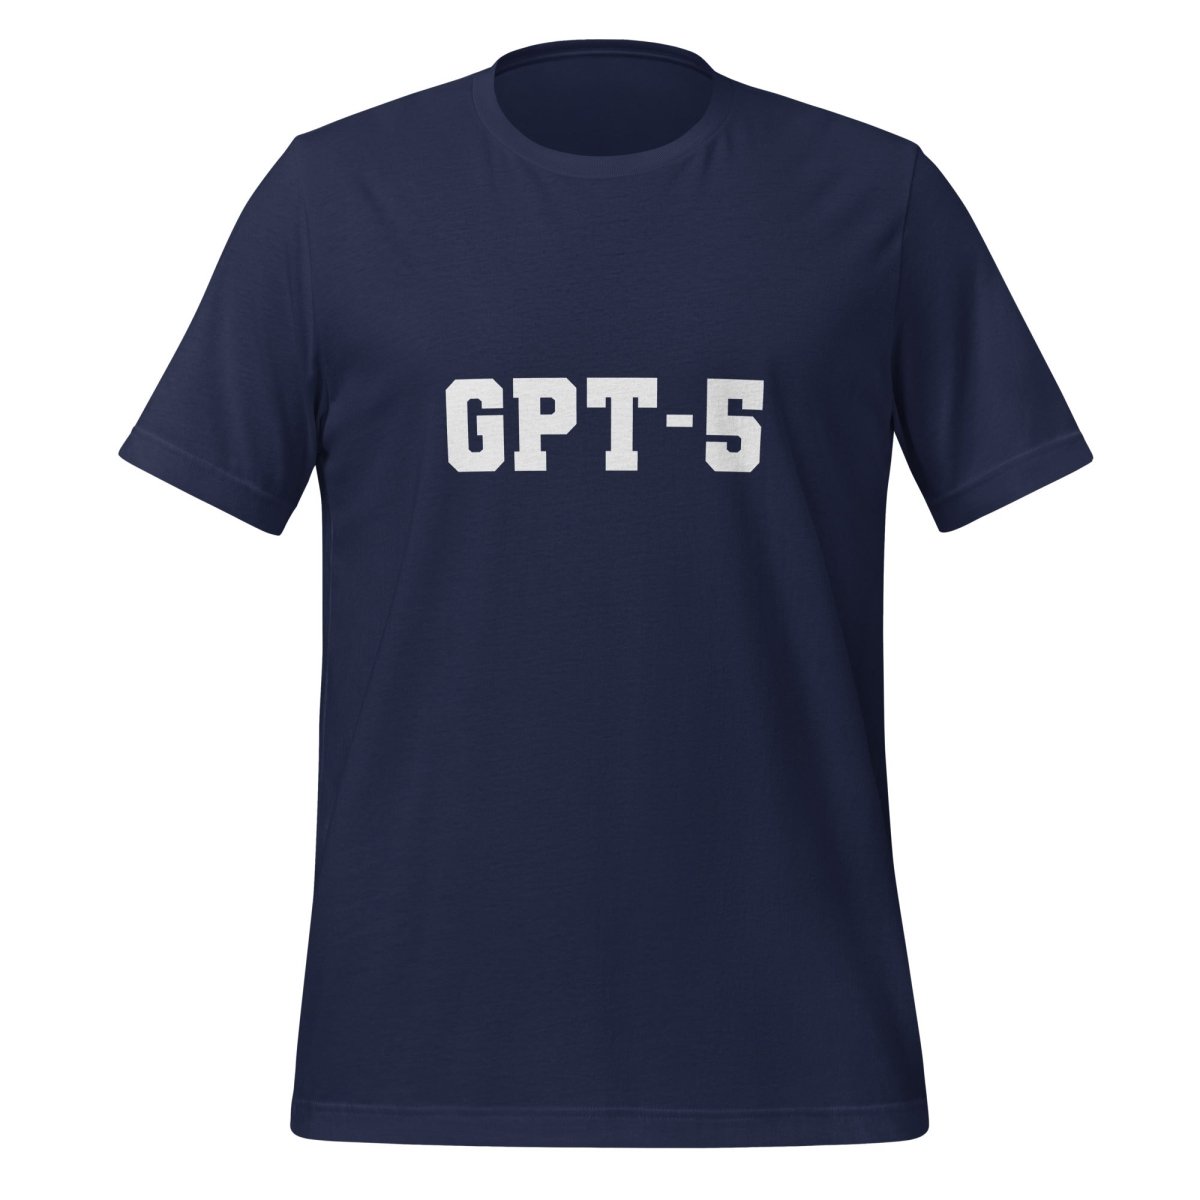 GPT - 5 T - Shirt 3 (unisex) - Navy - AI Store